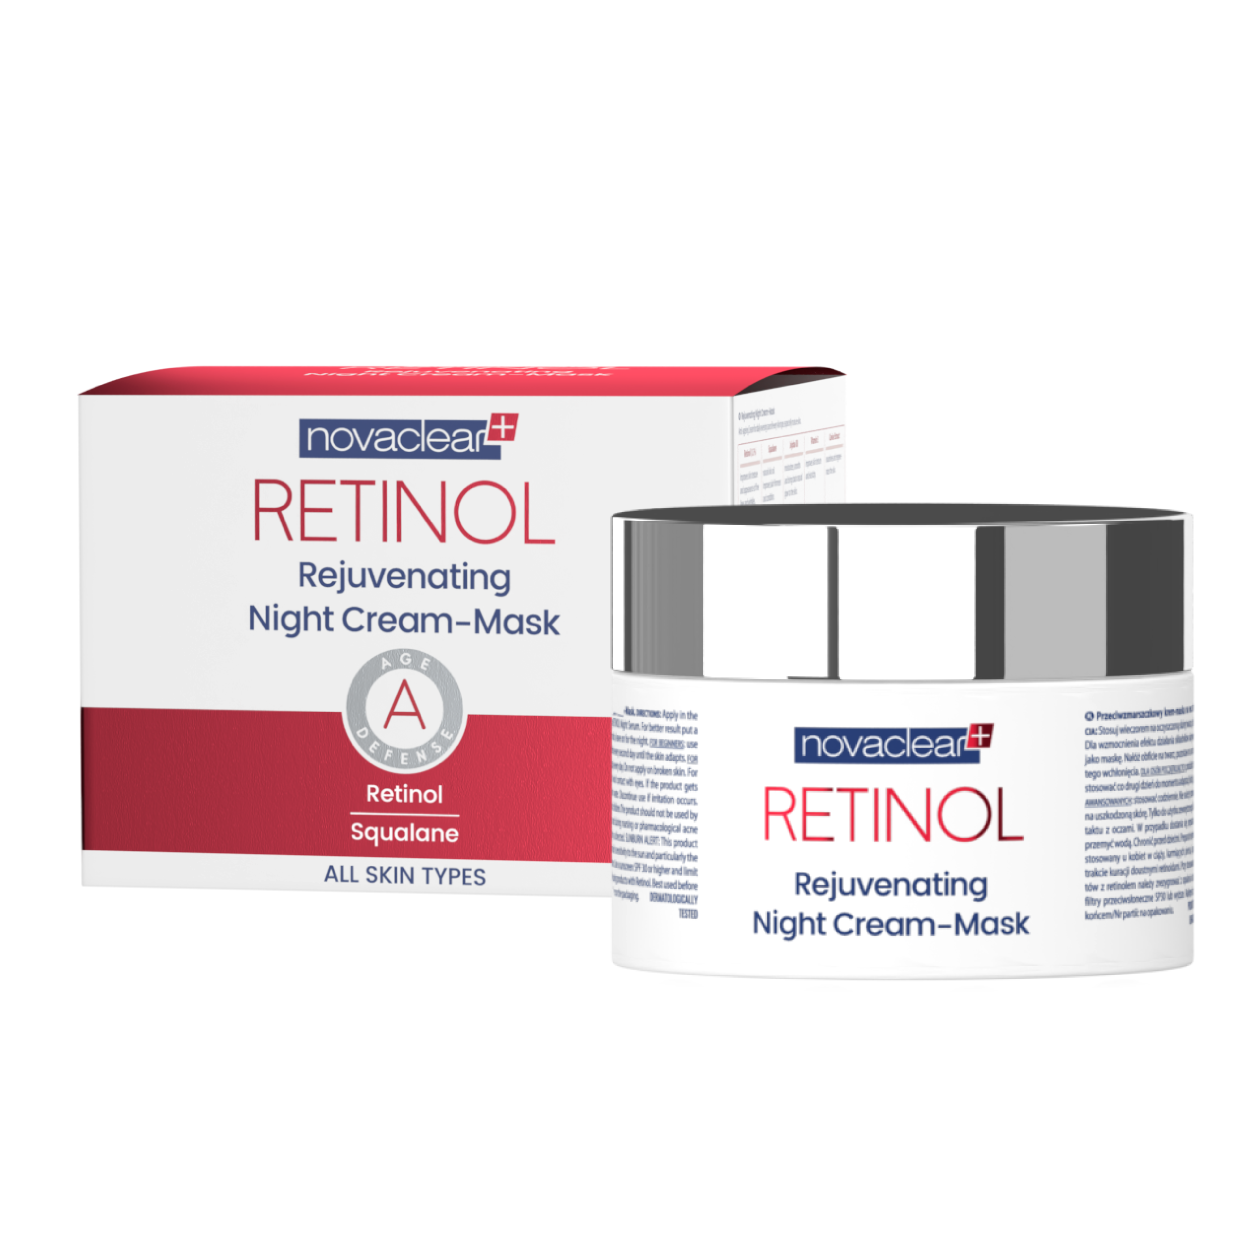 novaclear-retinol-rejuvenating-night-cream-mask